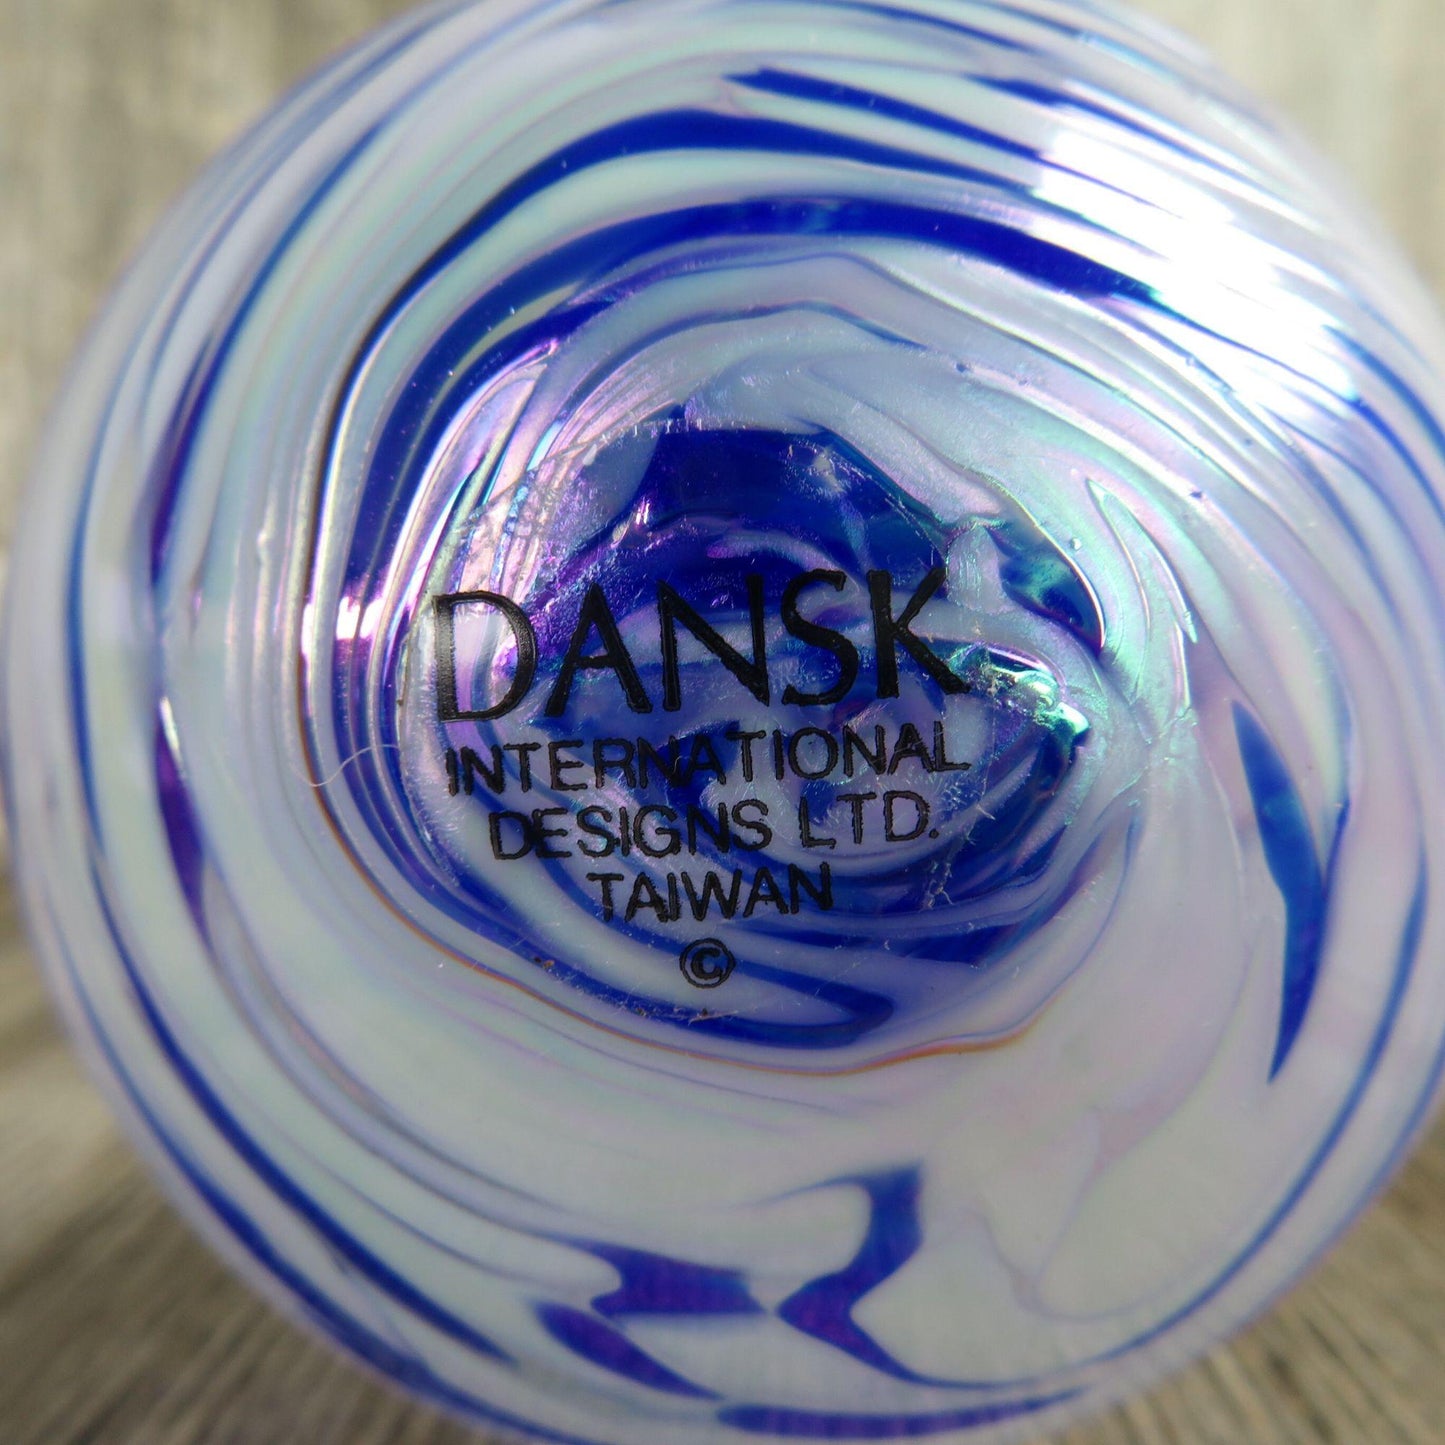 Vintage Blue Glass Ball Ornament Dansk Swirl Iridescent Textured Christmas